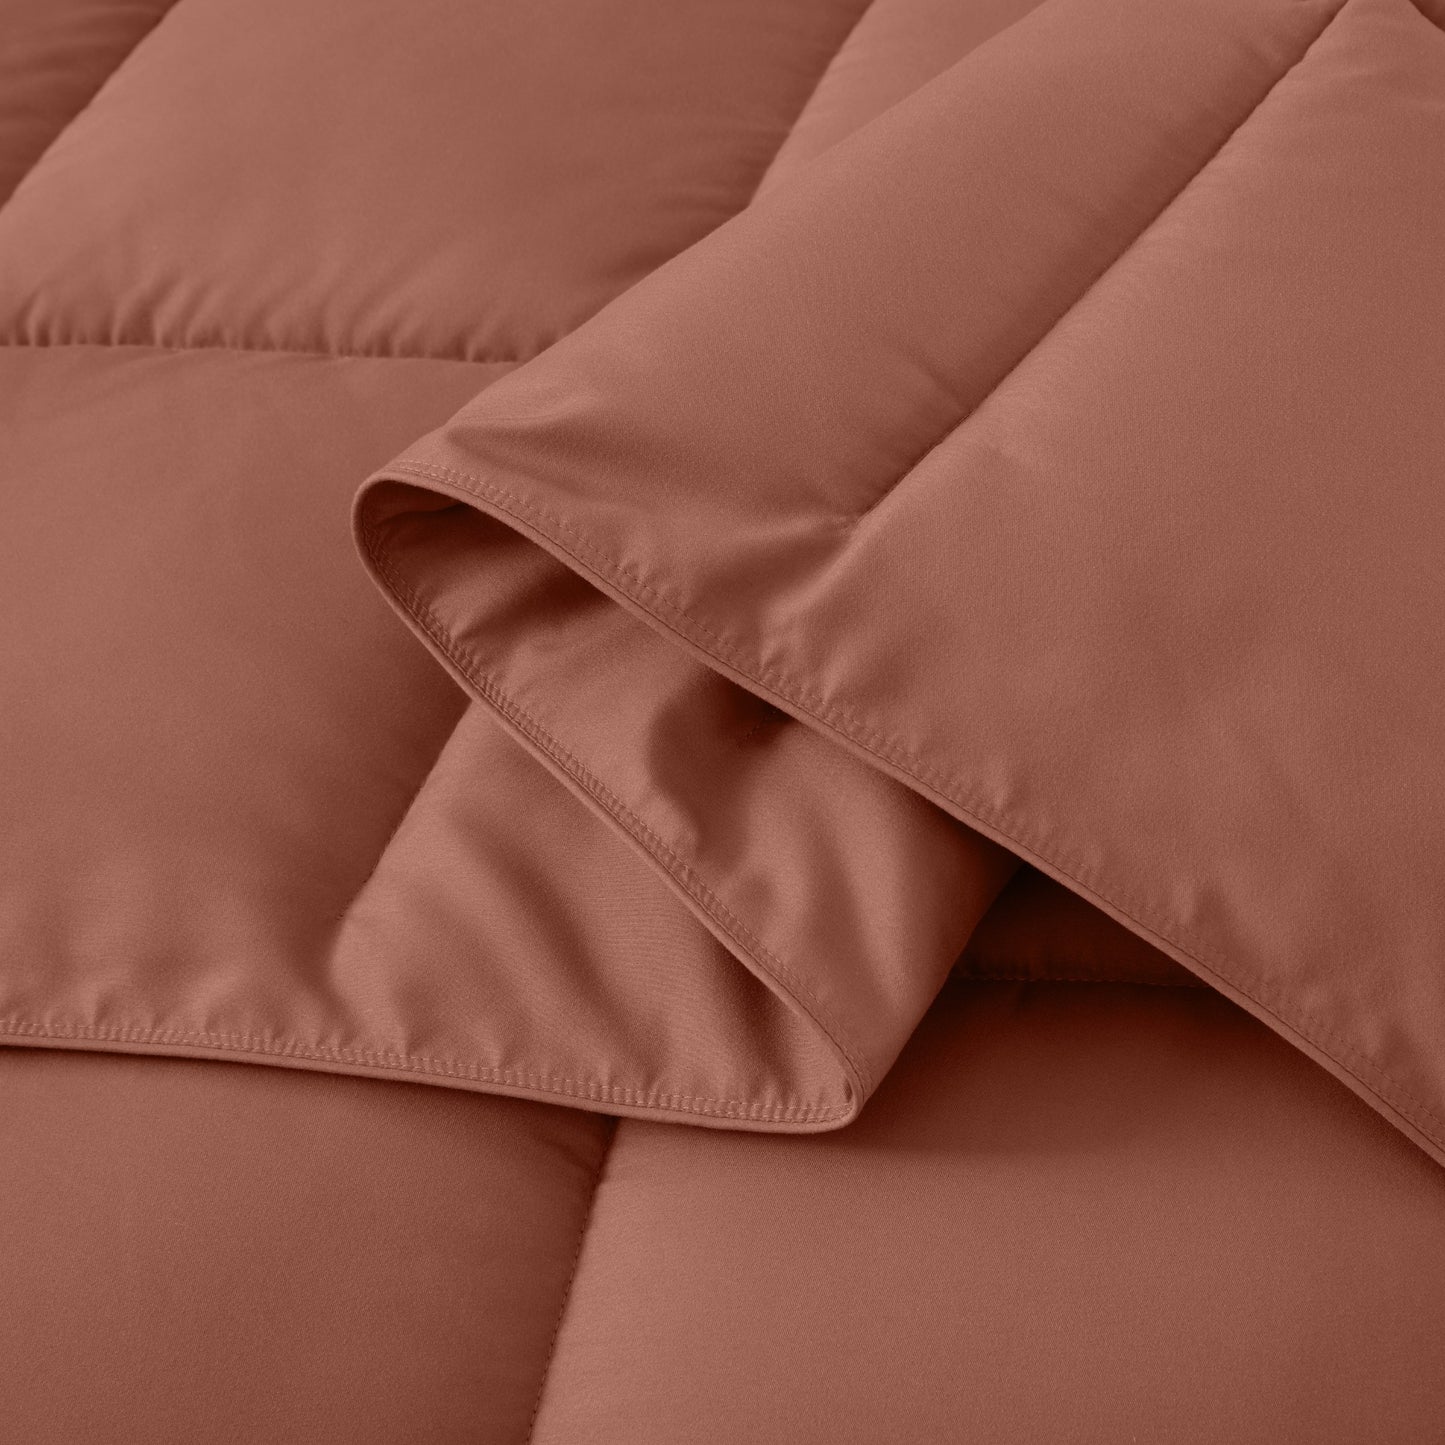 Peachskin Microfiber Down Alternative Comforter Set